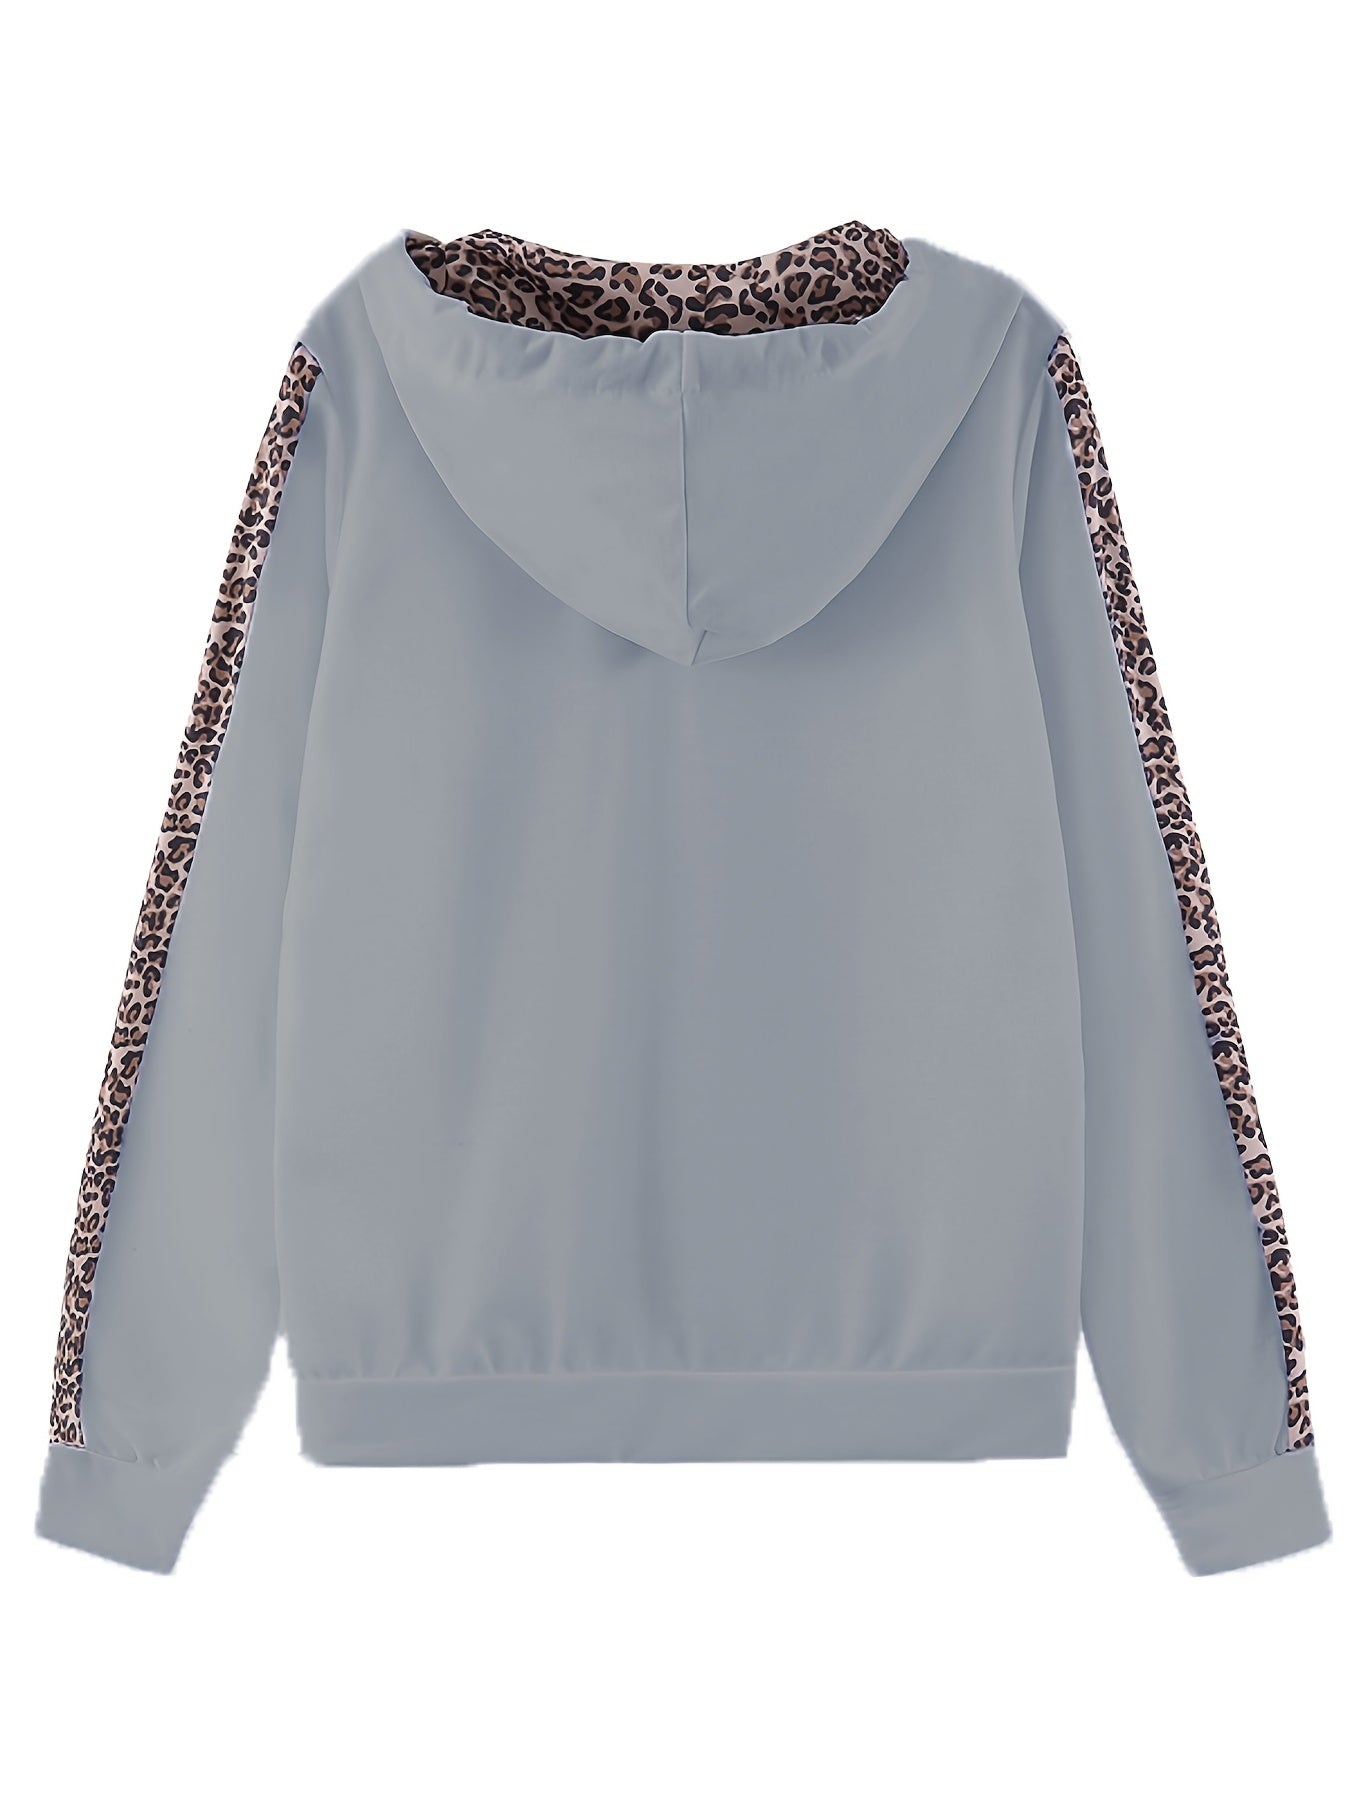 Leopard Print Two-piece Set, Zip Up Hoodie Sweatshirt & Casual High Waist Elastic Pants Outfits, Women's Clothing